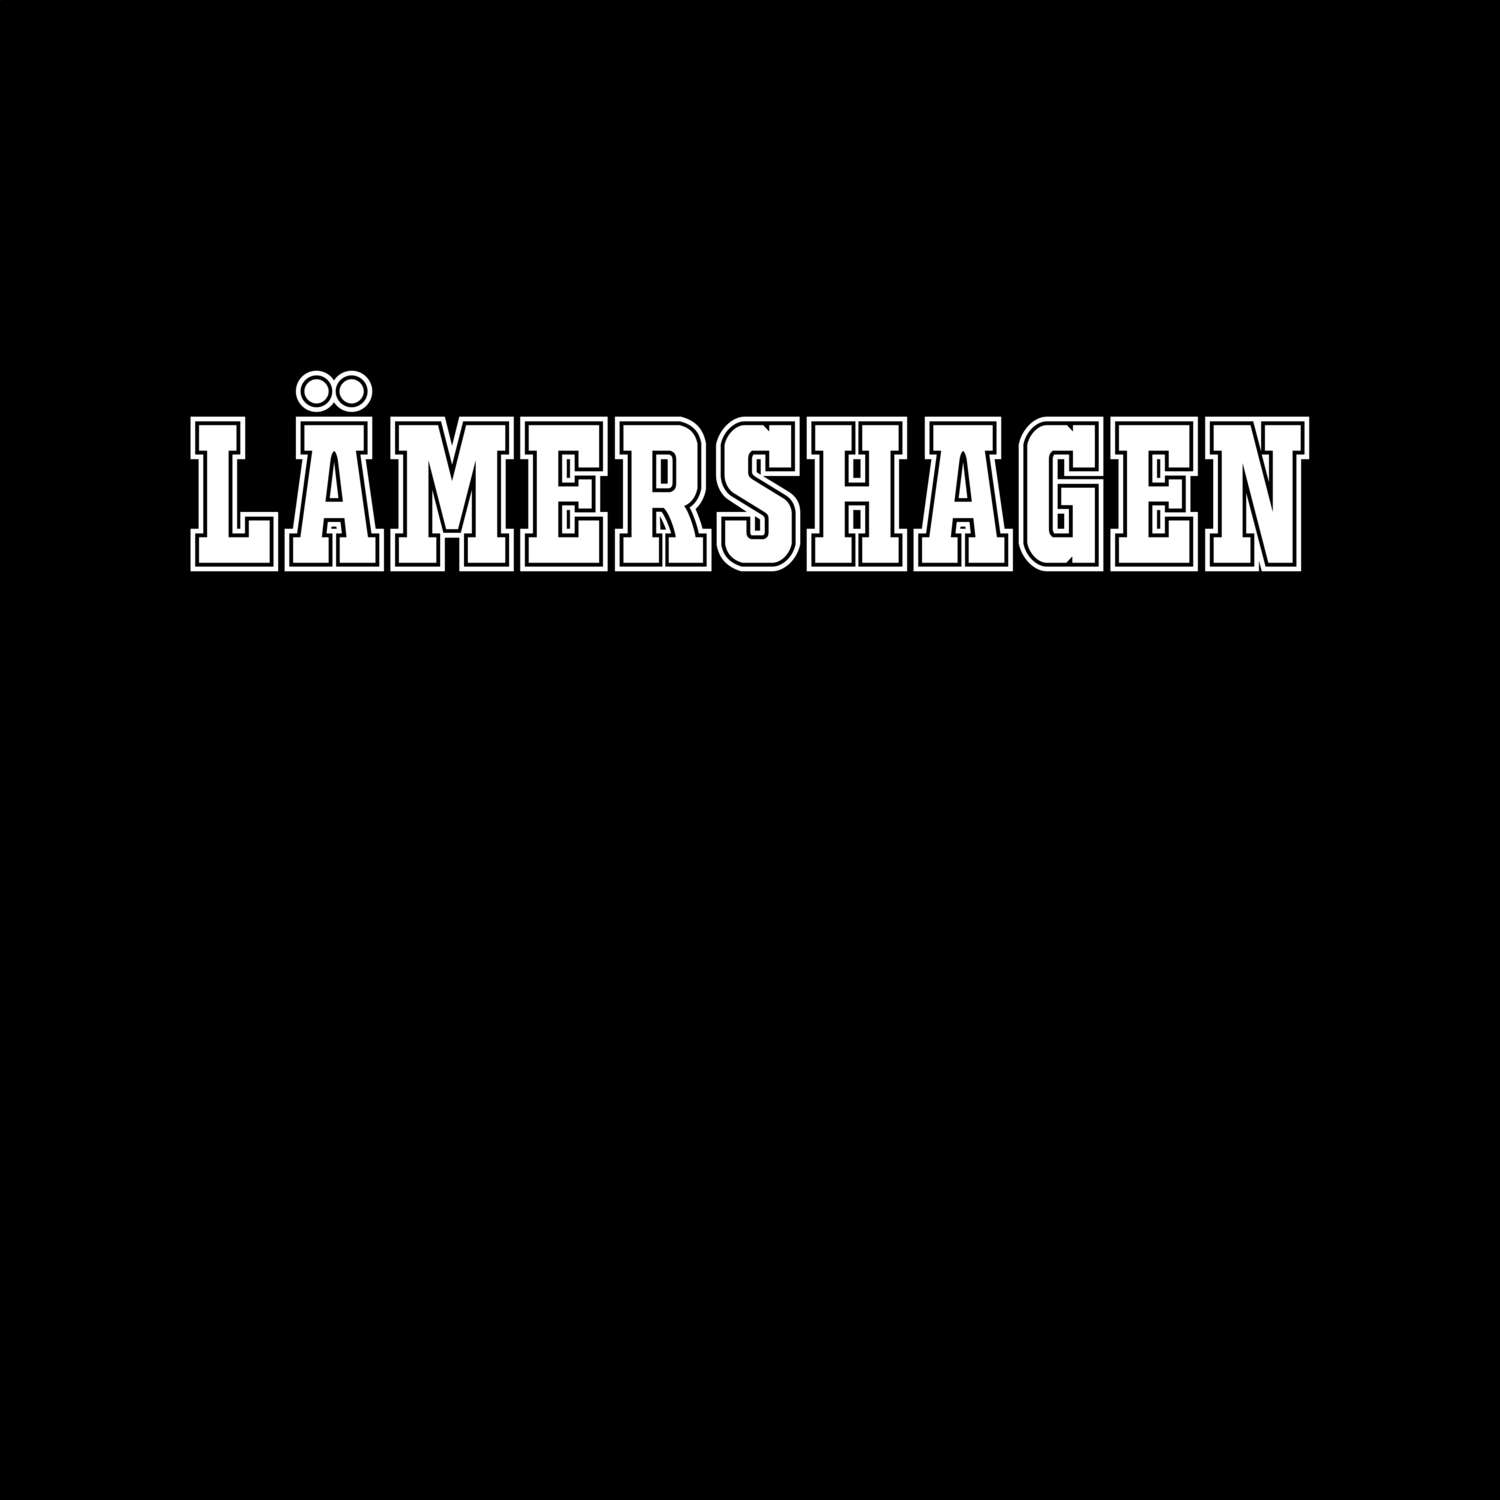 Lämershagen T-Shirt »Classic«